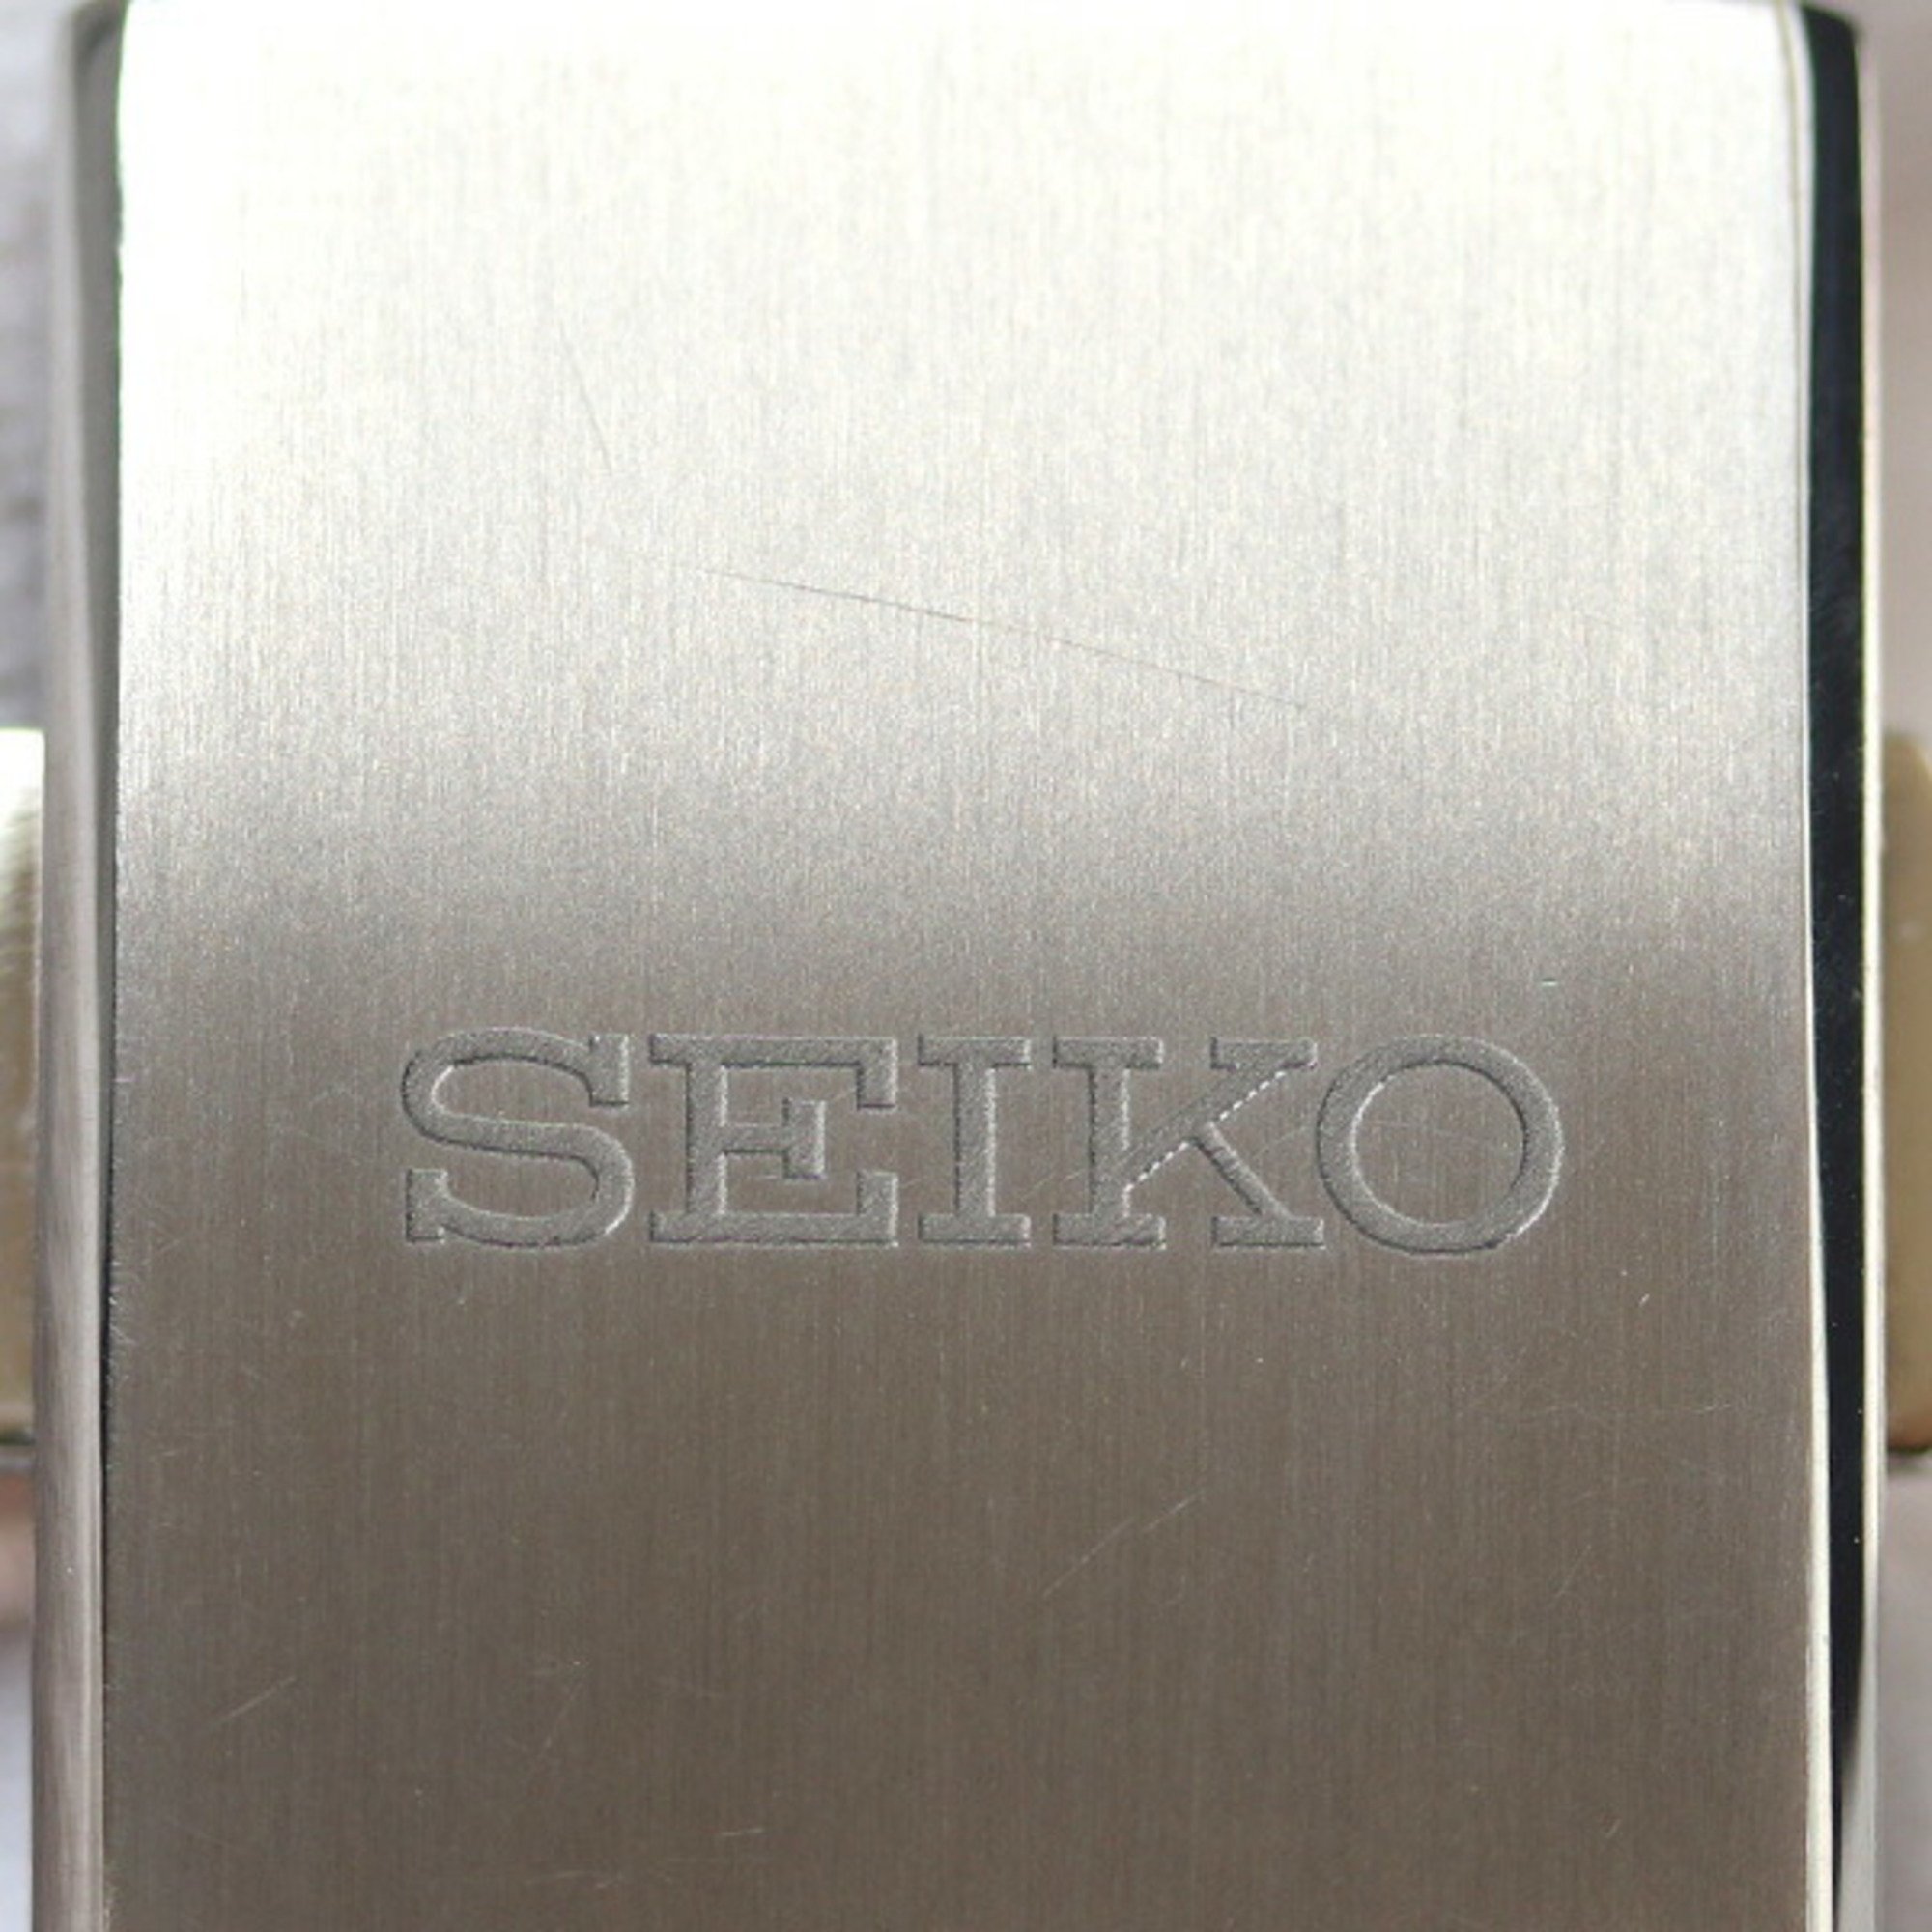 SEIKO Astron GPS watch solar SBXC009/5X53-0AD0